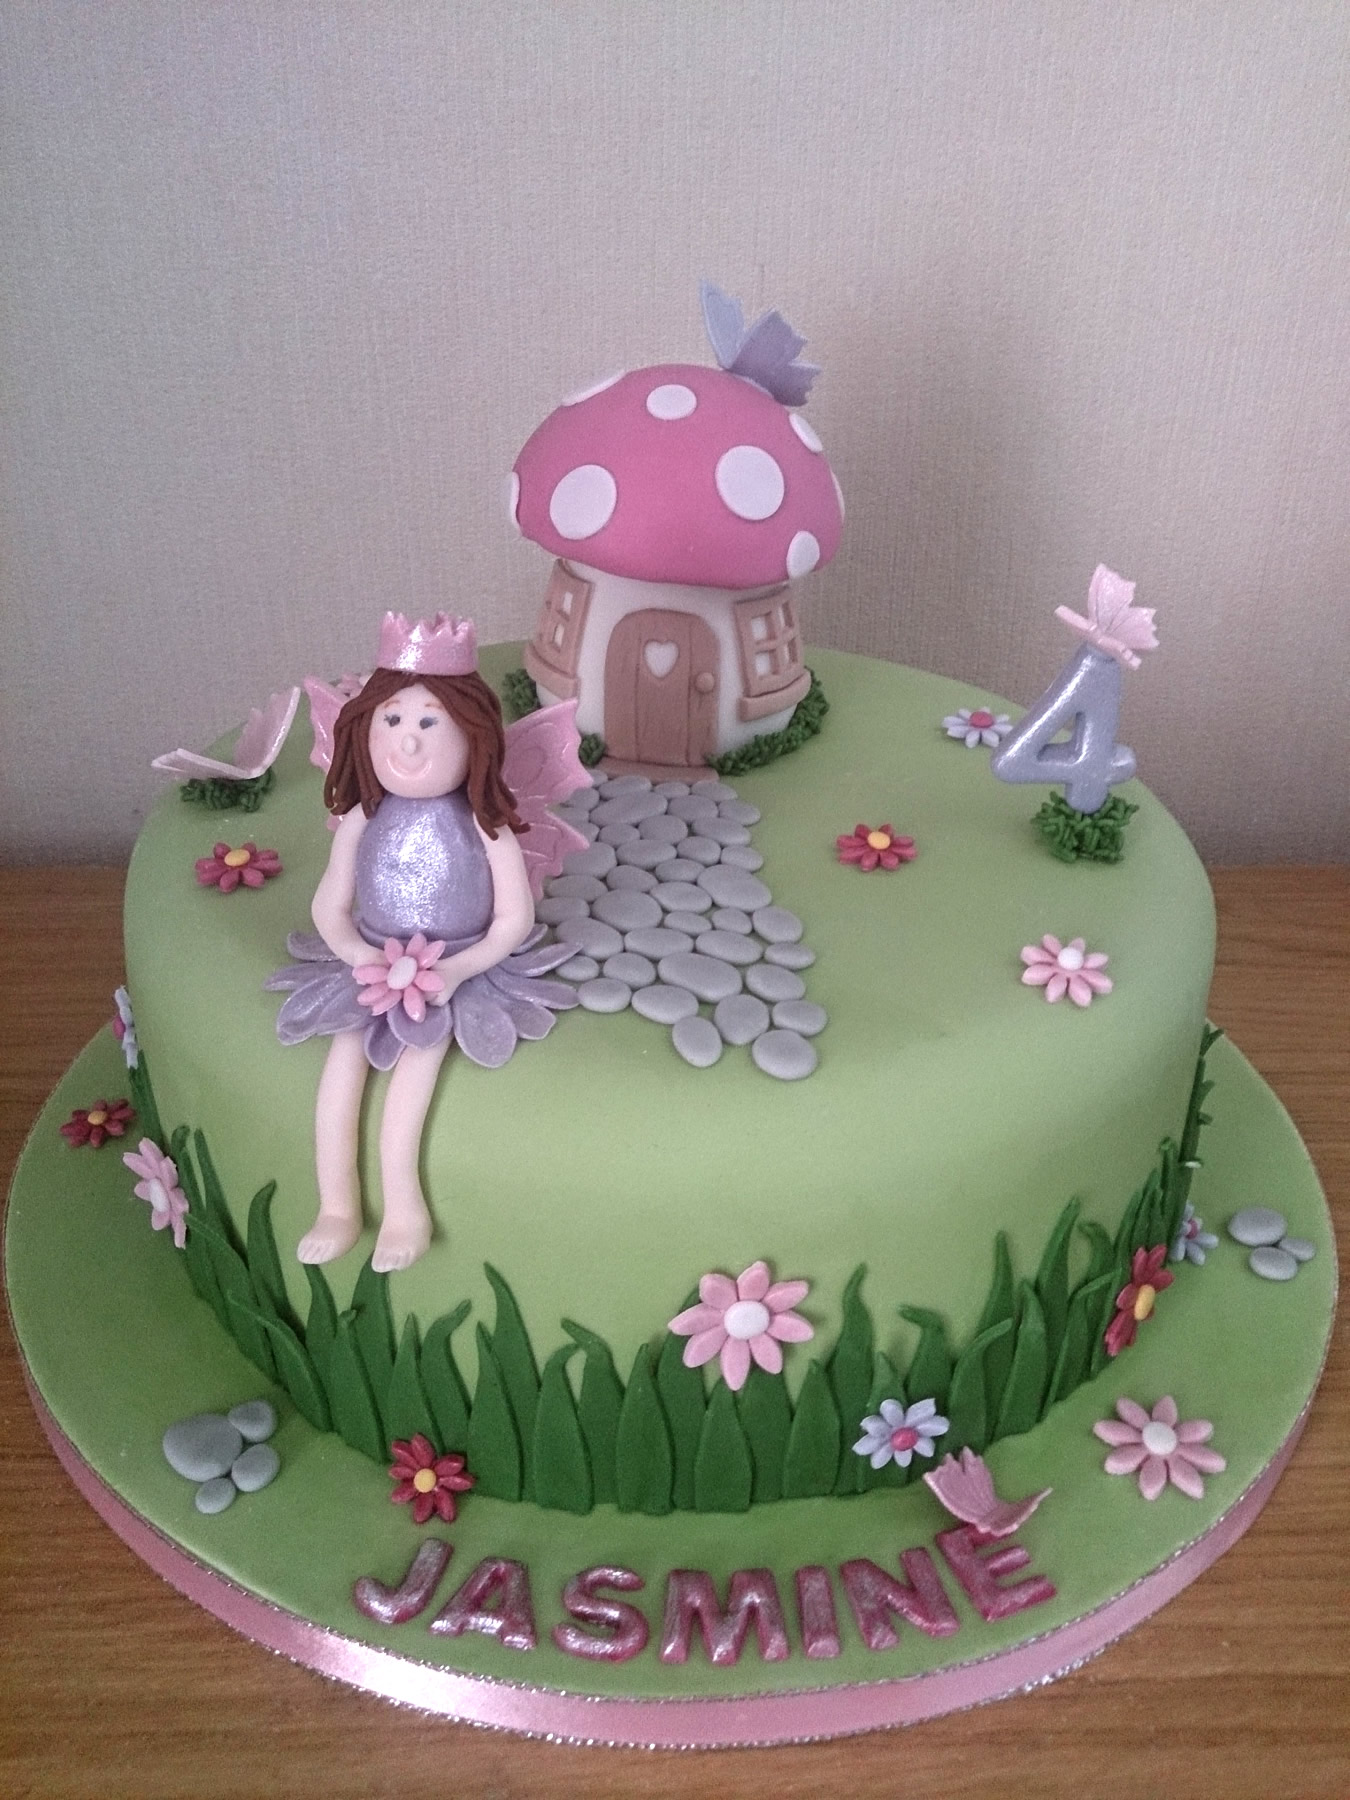 Very Unique Cakes by Veronique - Fairy Princess Cake 👑 💕 | Facebook